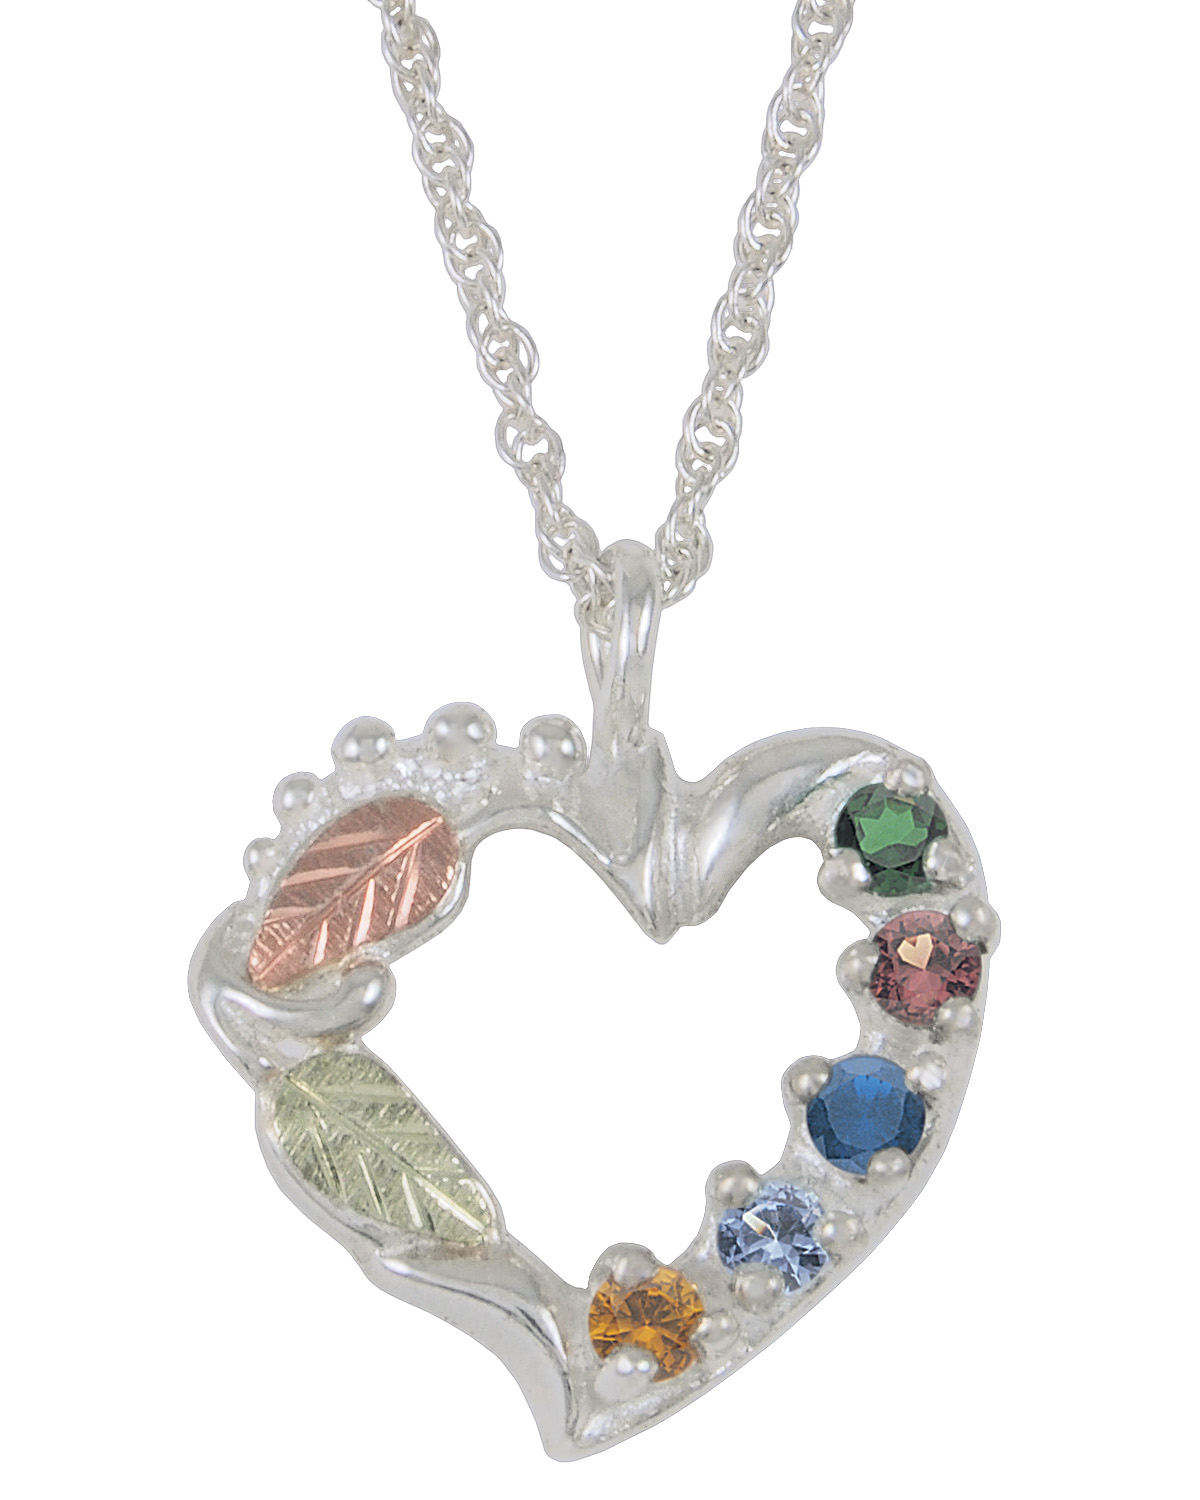 Citrine, Aquamarine, Sapphire, Garnet, Emerald Heart Pendant Necklace, Sterling Silver